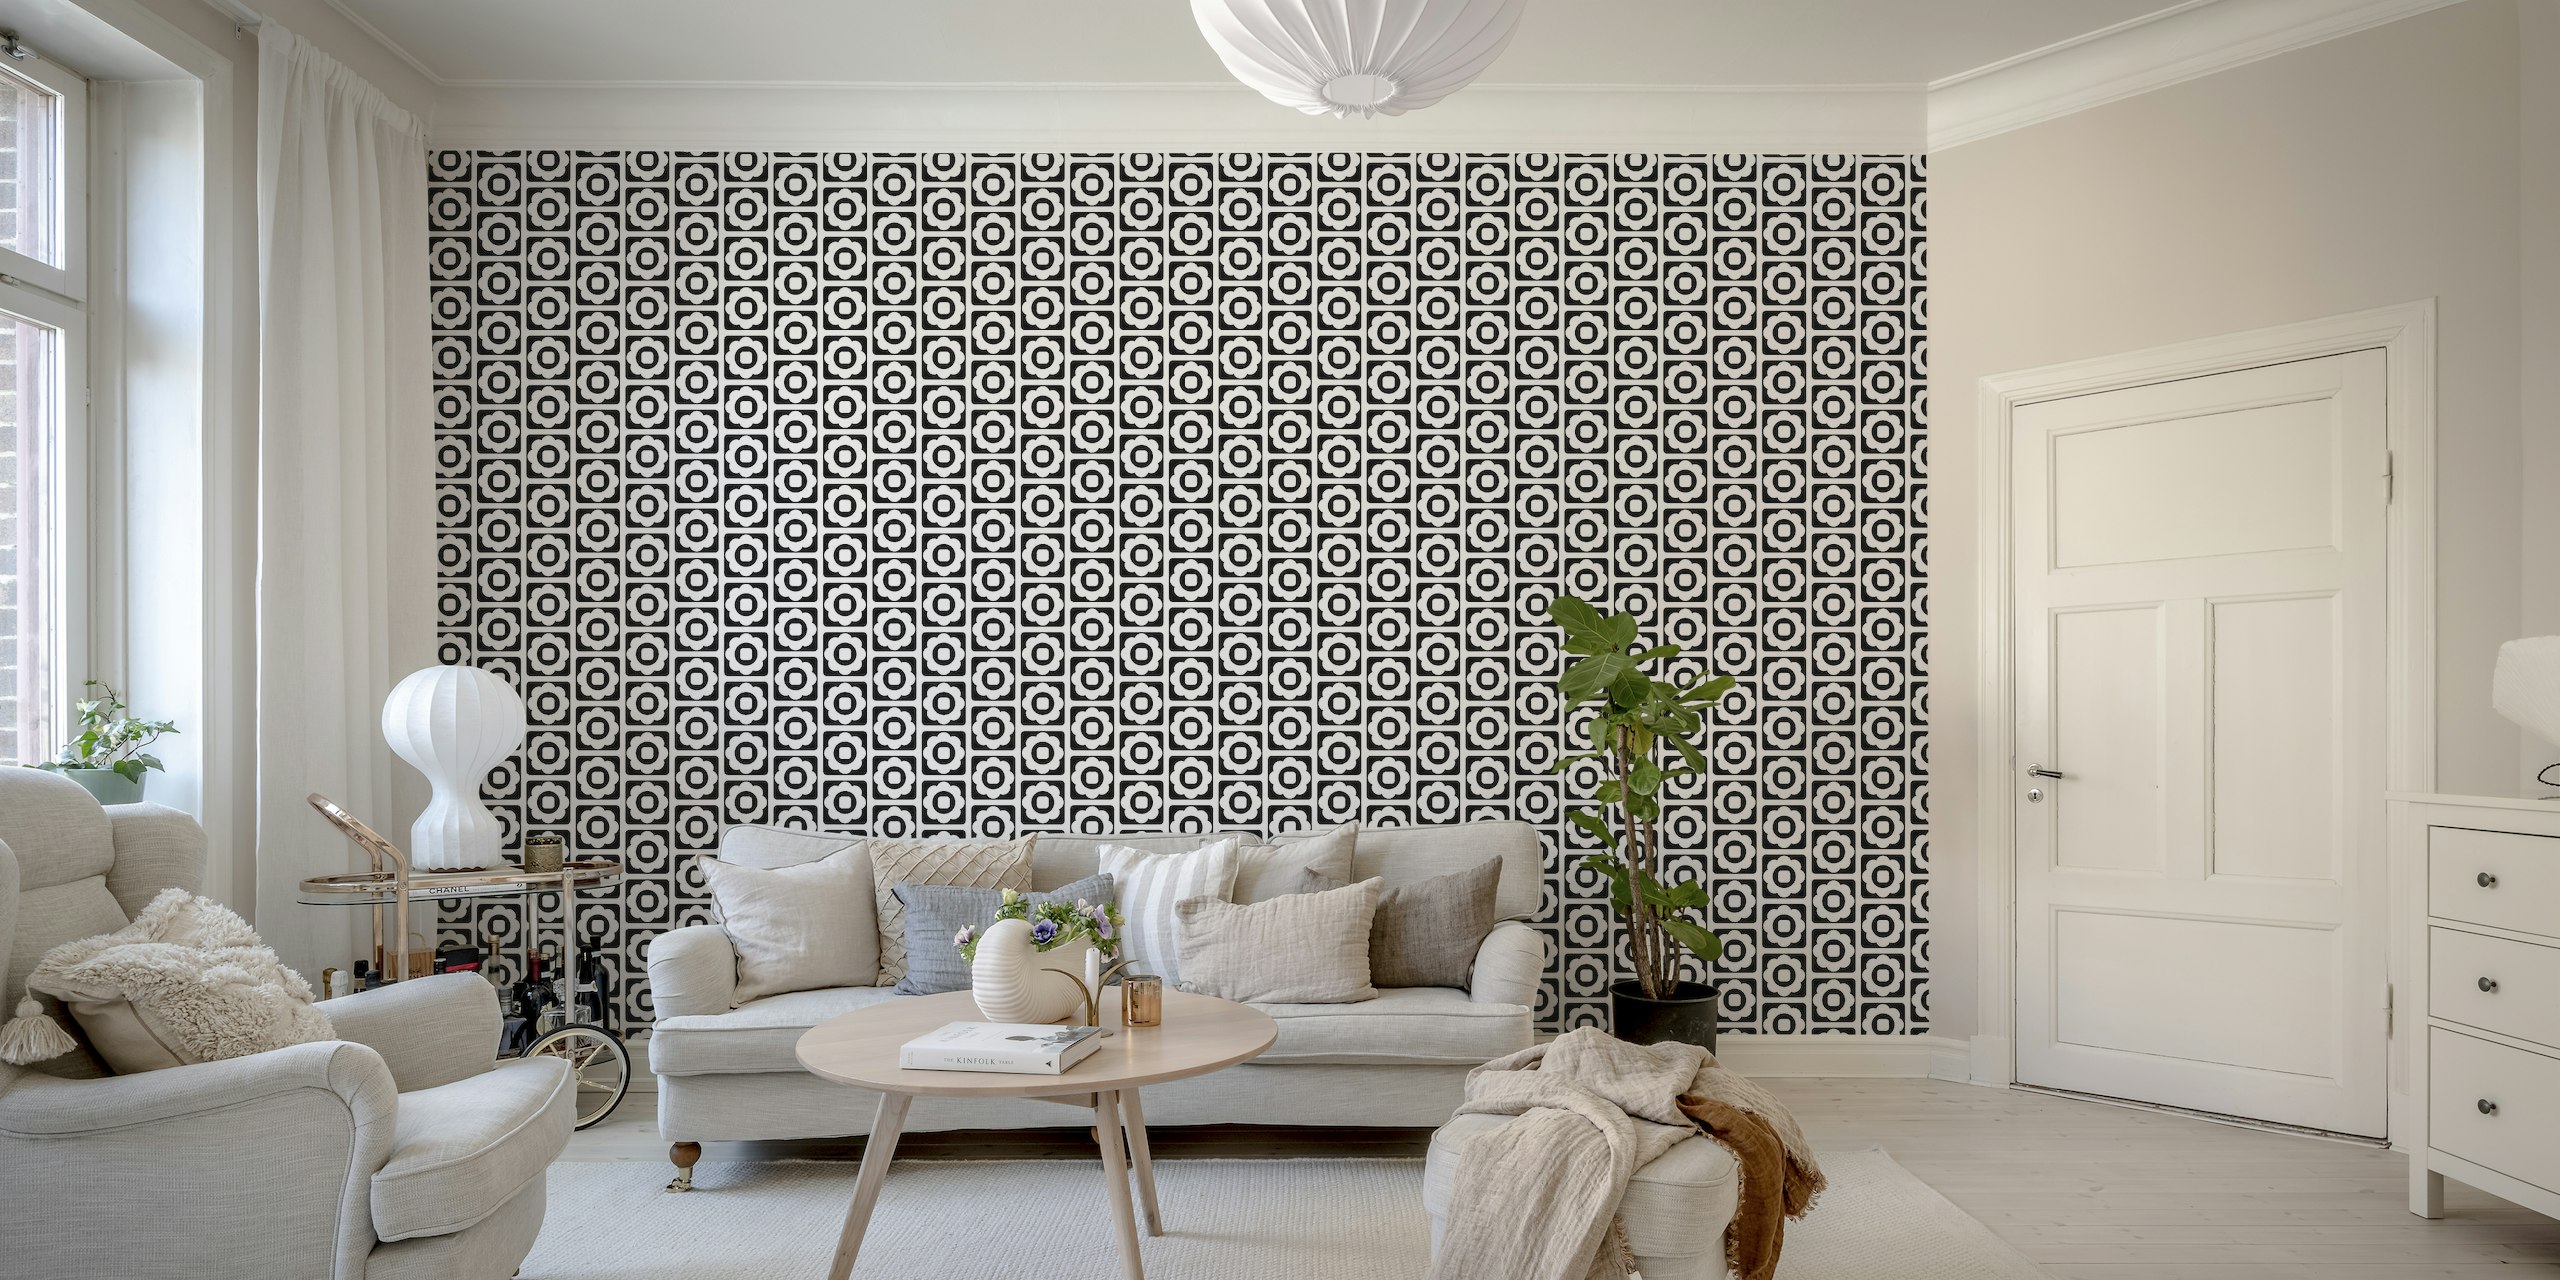 2689 E - black and white floral tiles papel pintado